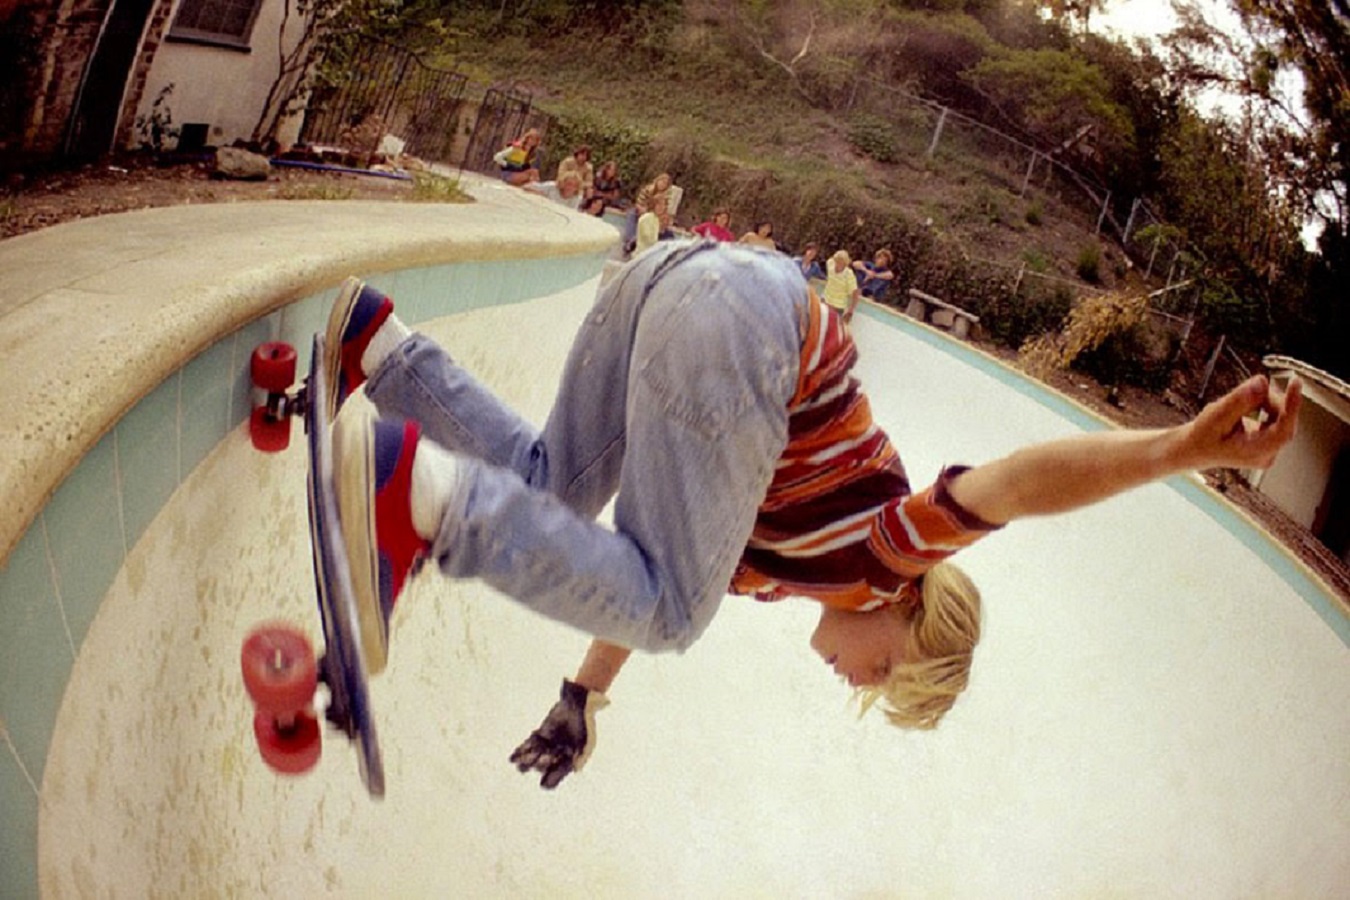 1970-California-skateboard-skater-kids-locals-only-hugh-holland-34